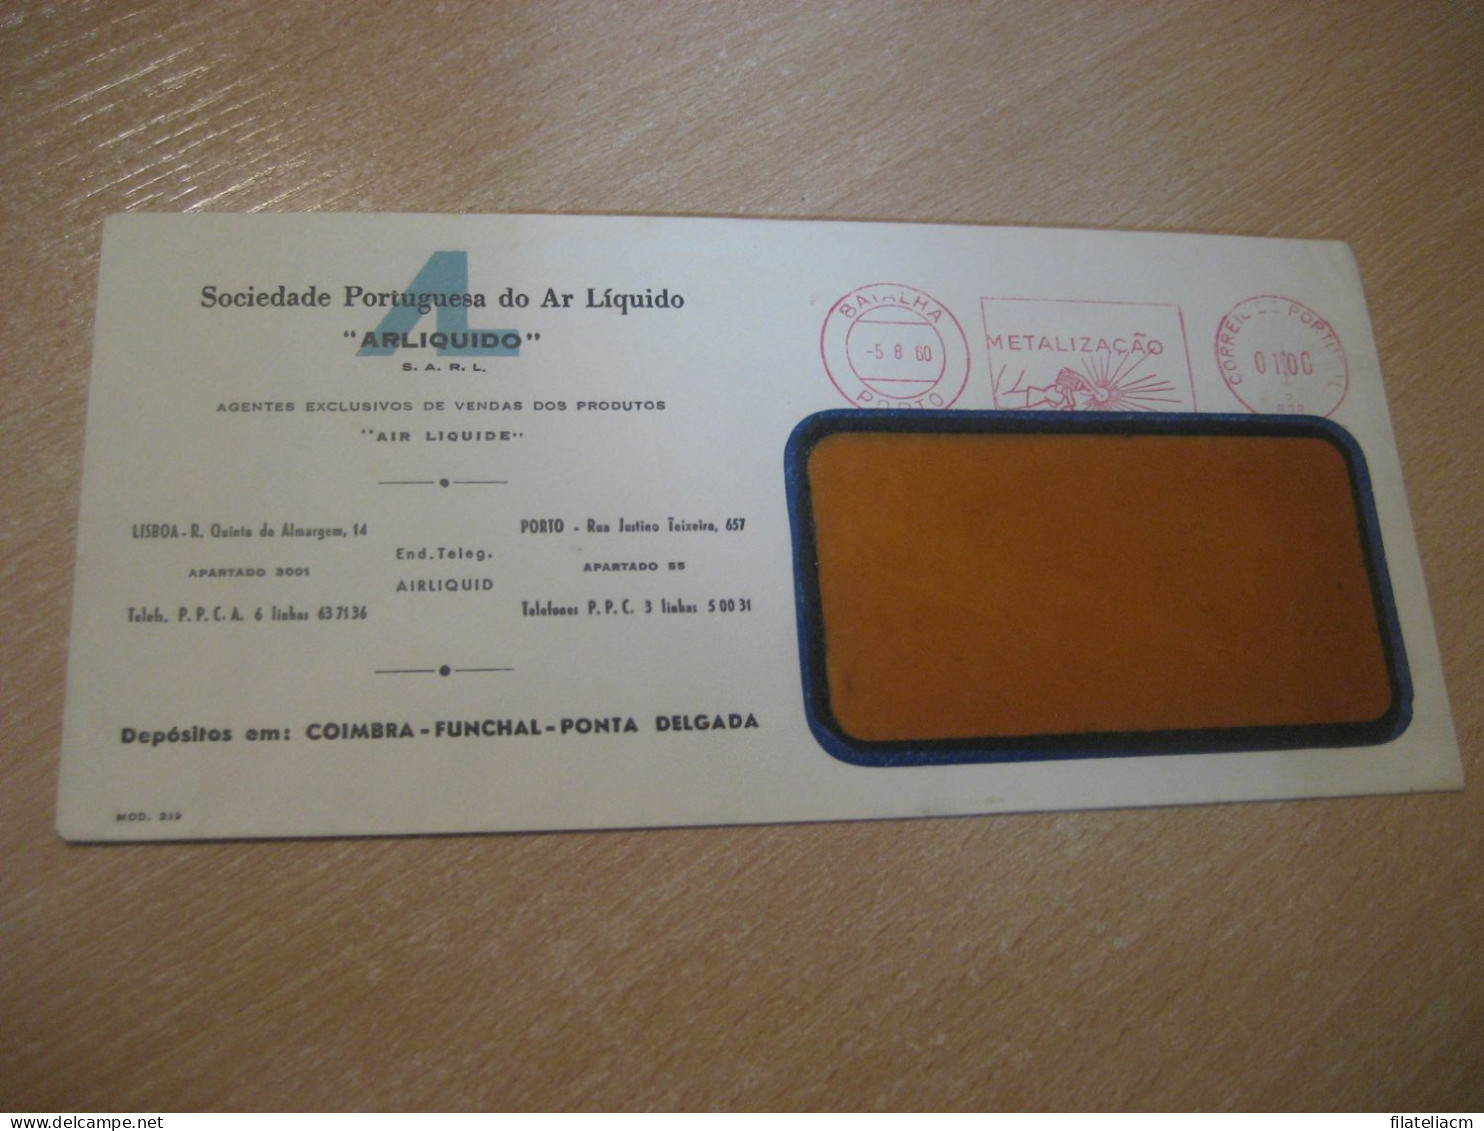 PORTO 1960 ARLIQUIDO Metalizaçao Air Liquide Chemical Physics Meter Mail Cancel Cover PORTUGAL - Lettres & Documents